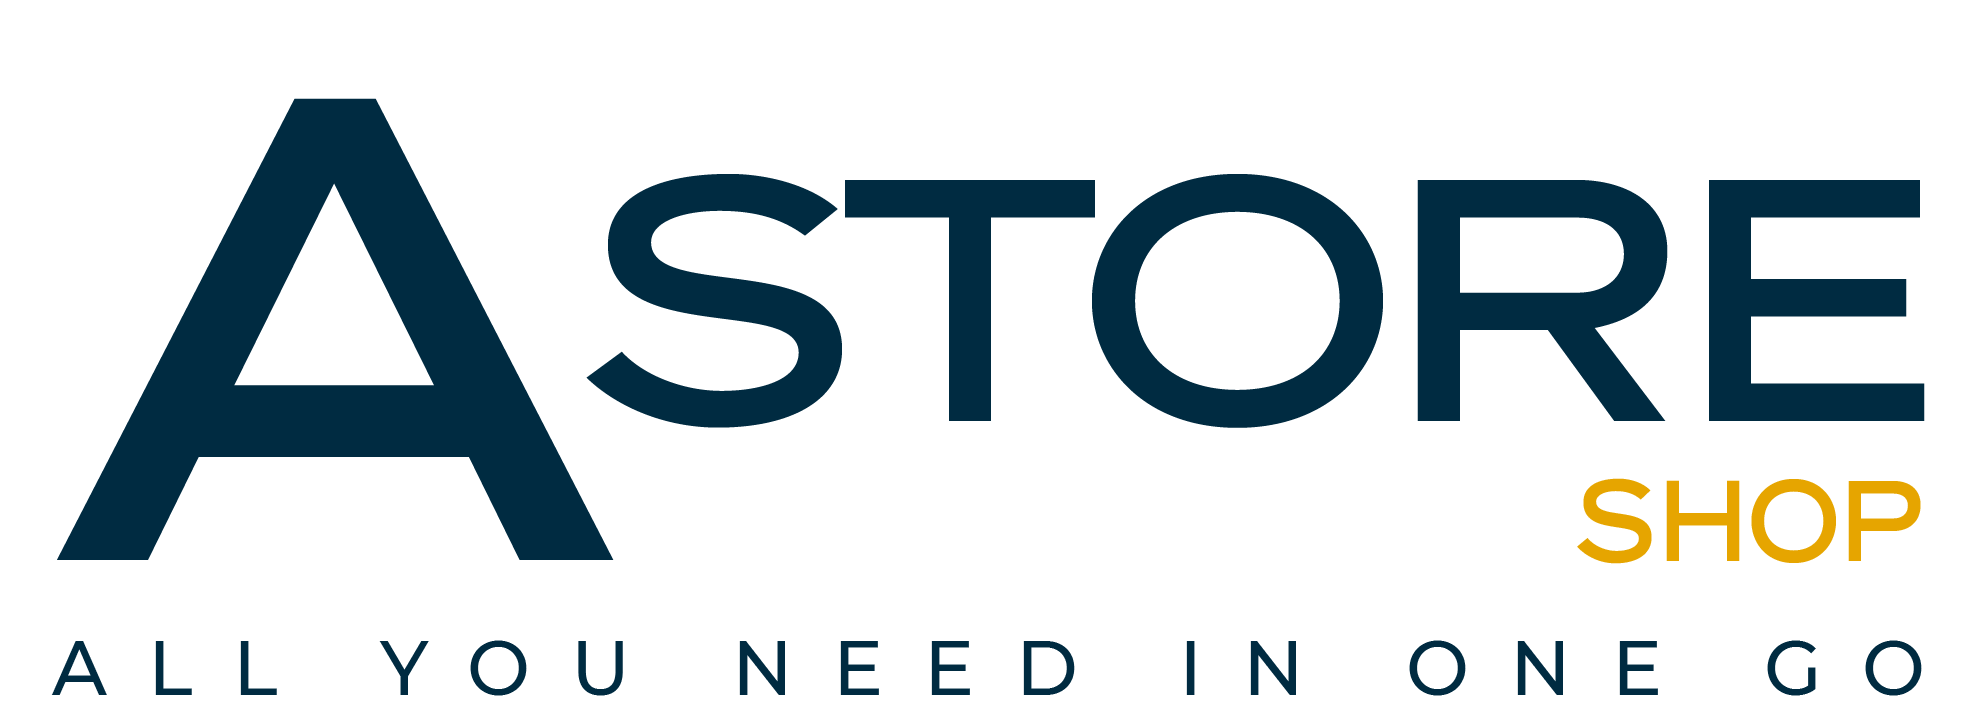 Astore Shop logo